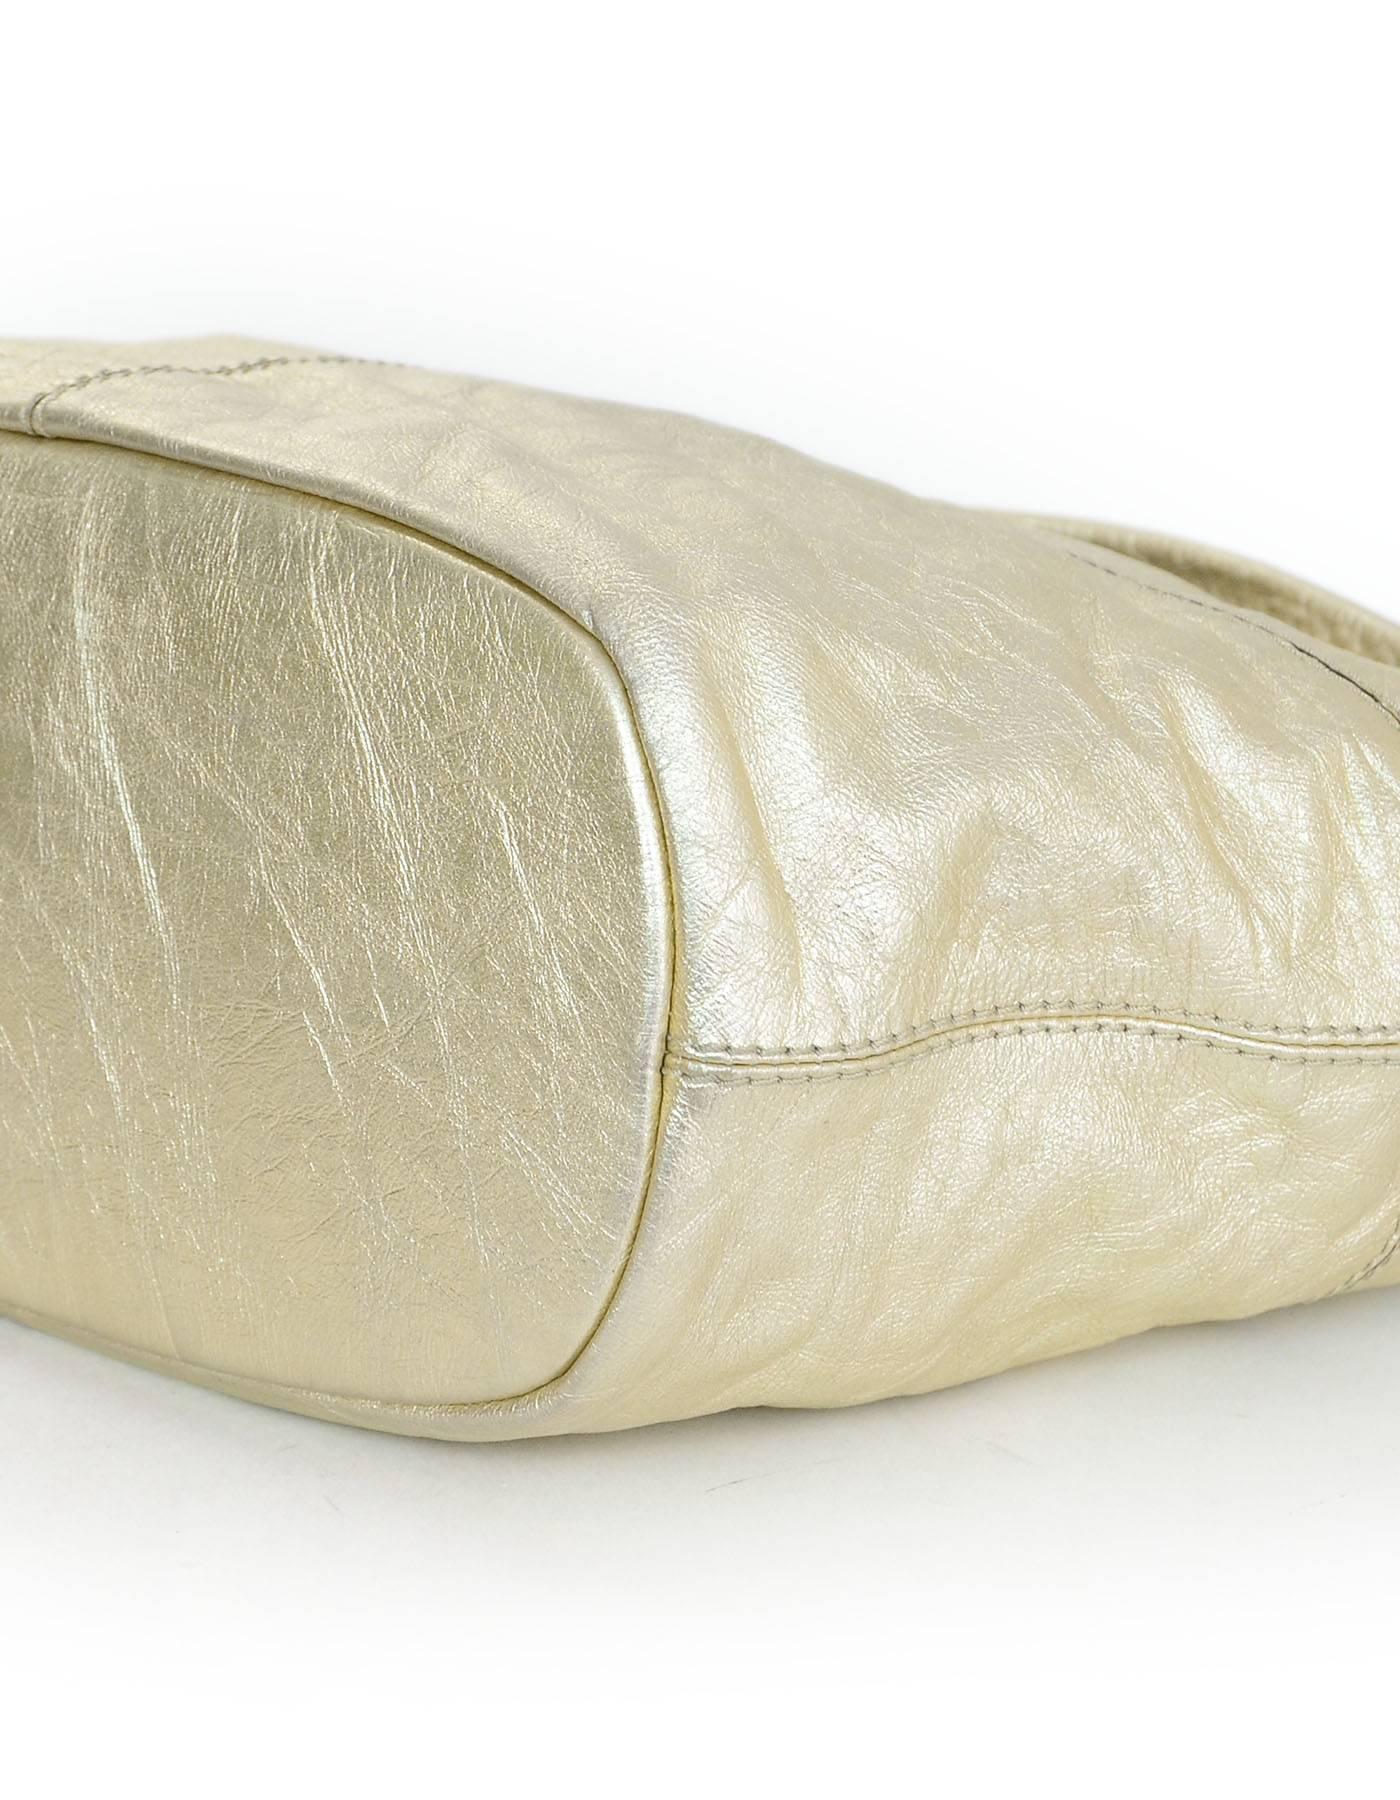 Givenchy Gold Leather Nightingale Satchel Bag 1